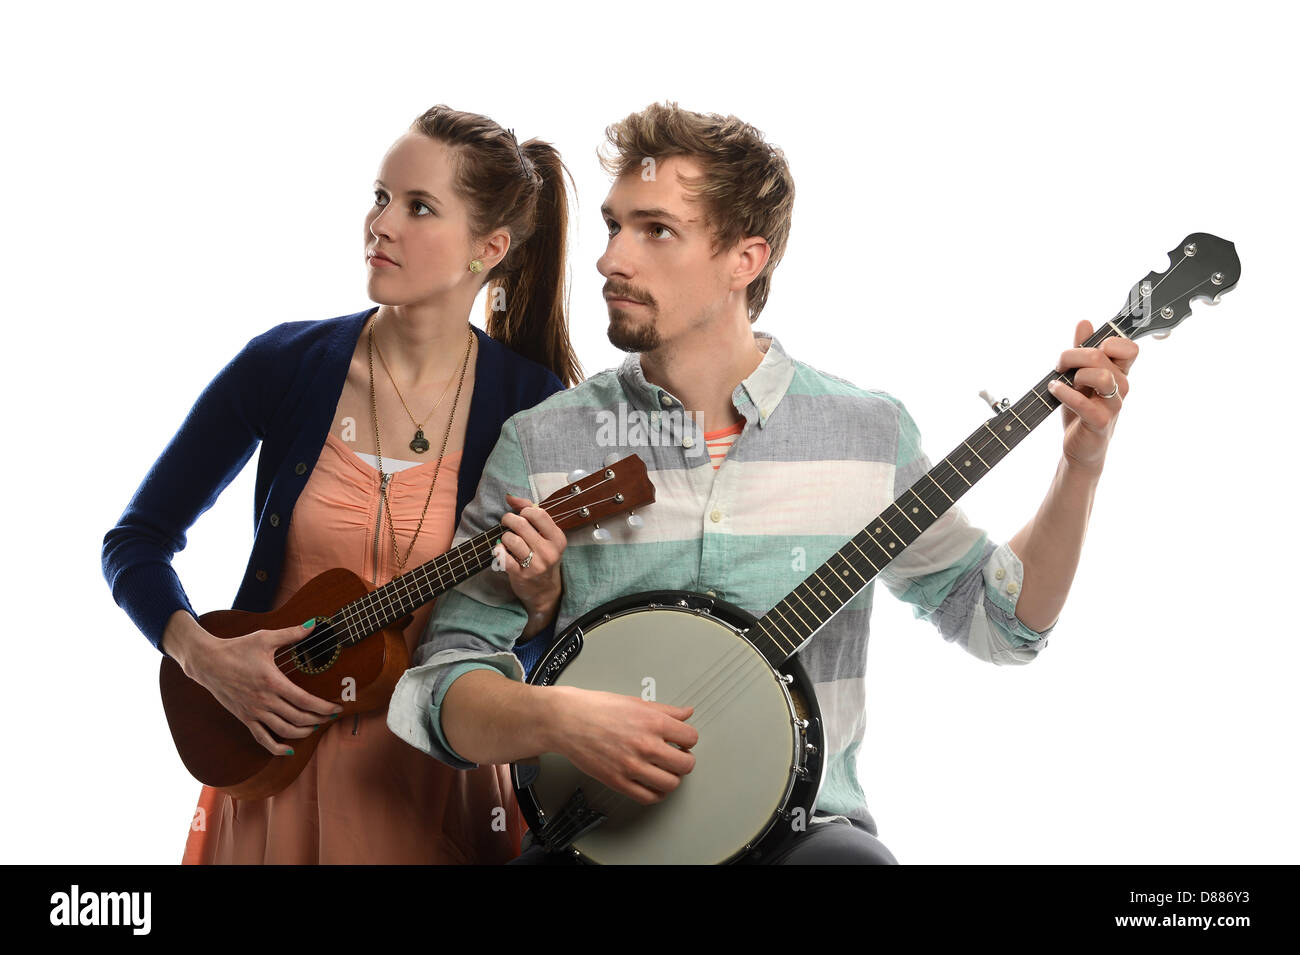 Femme jouant de ucalaly et homme jouant du banjo isolated over white background Banque D'Images